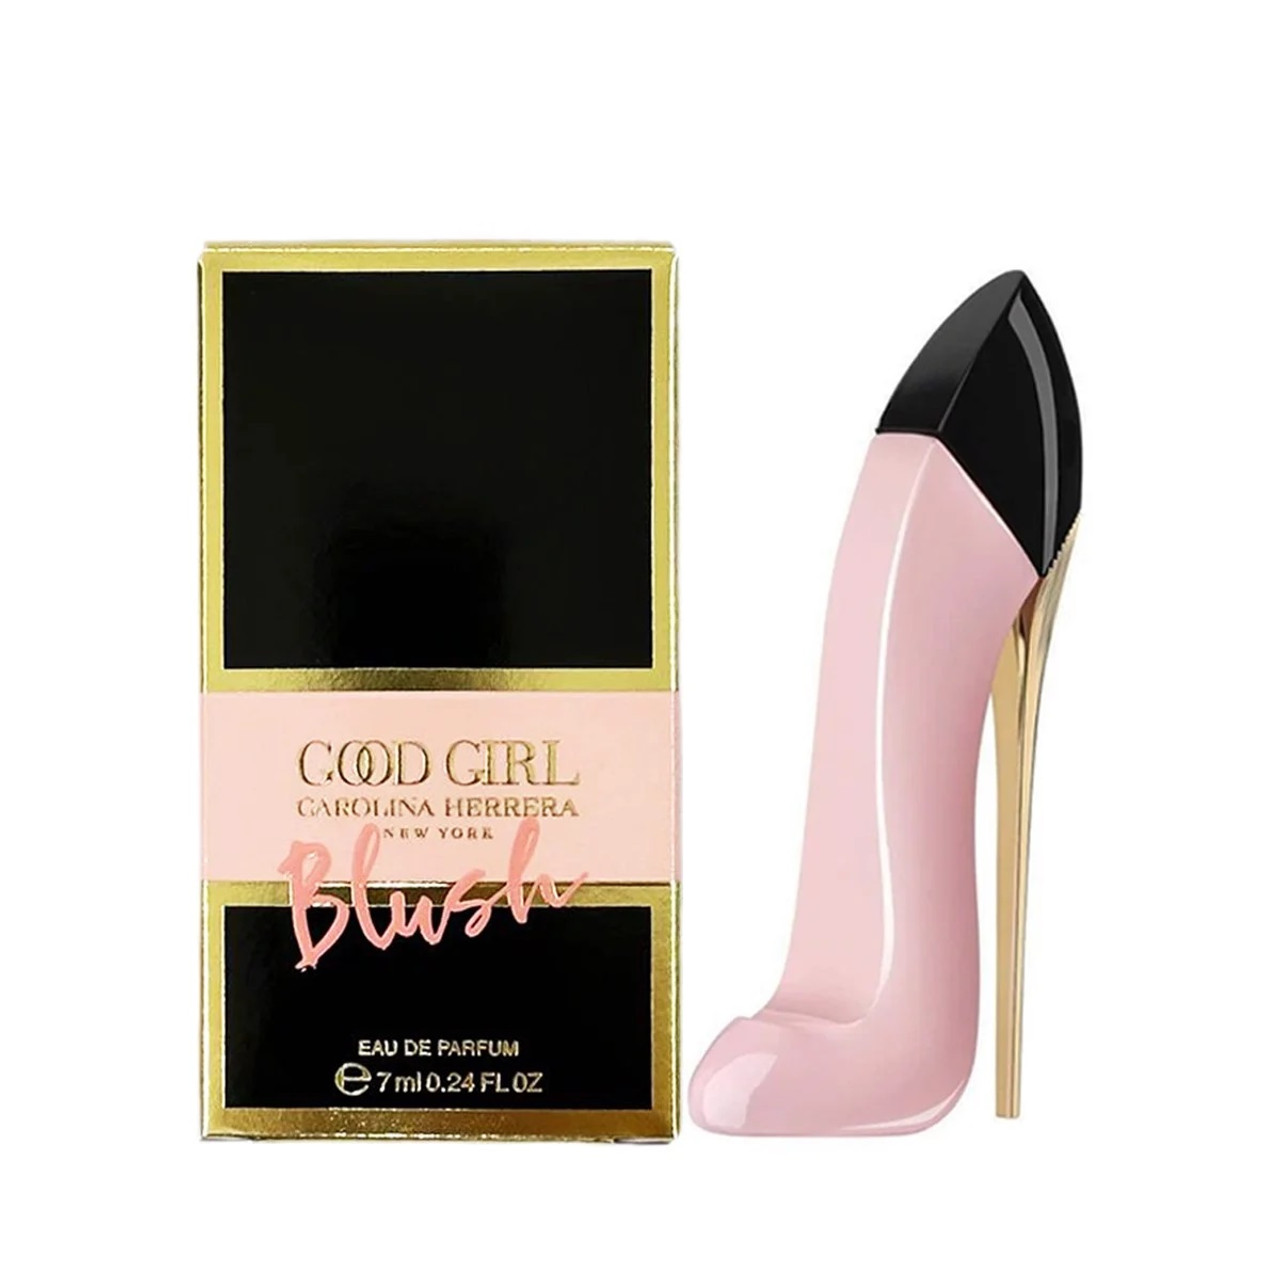 Carolina Herrera Good Girl Blush Perfume Set